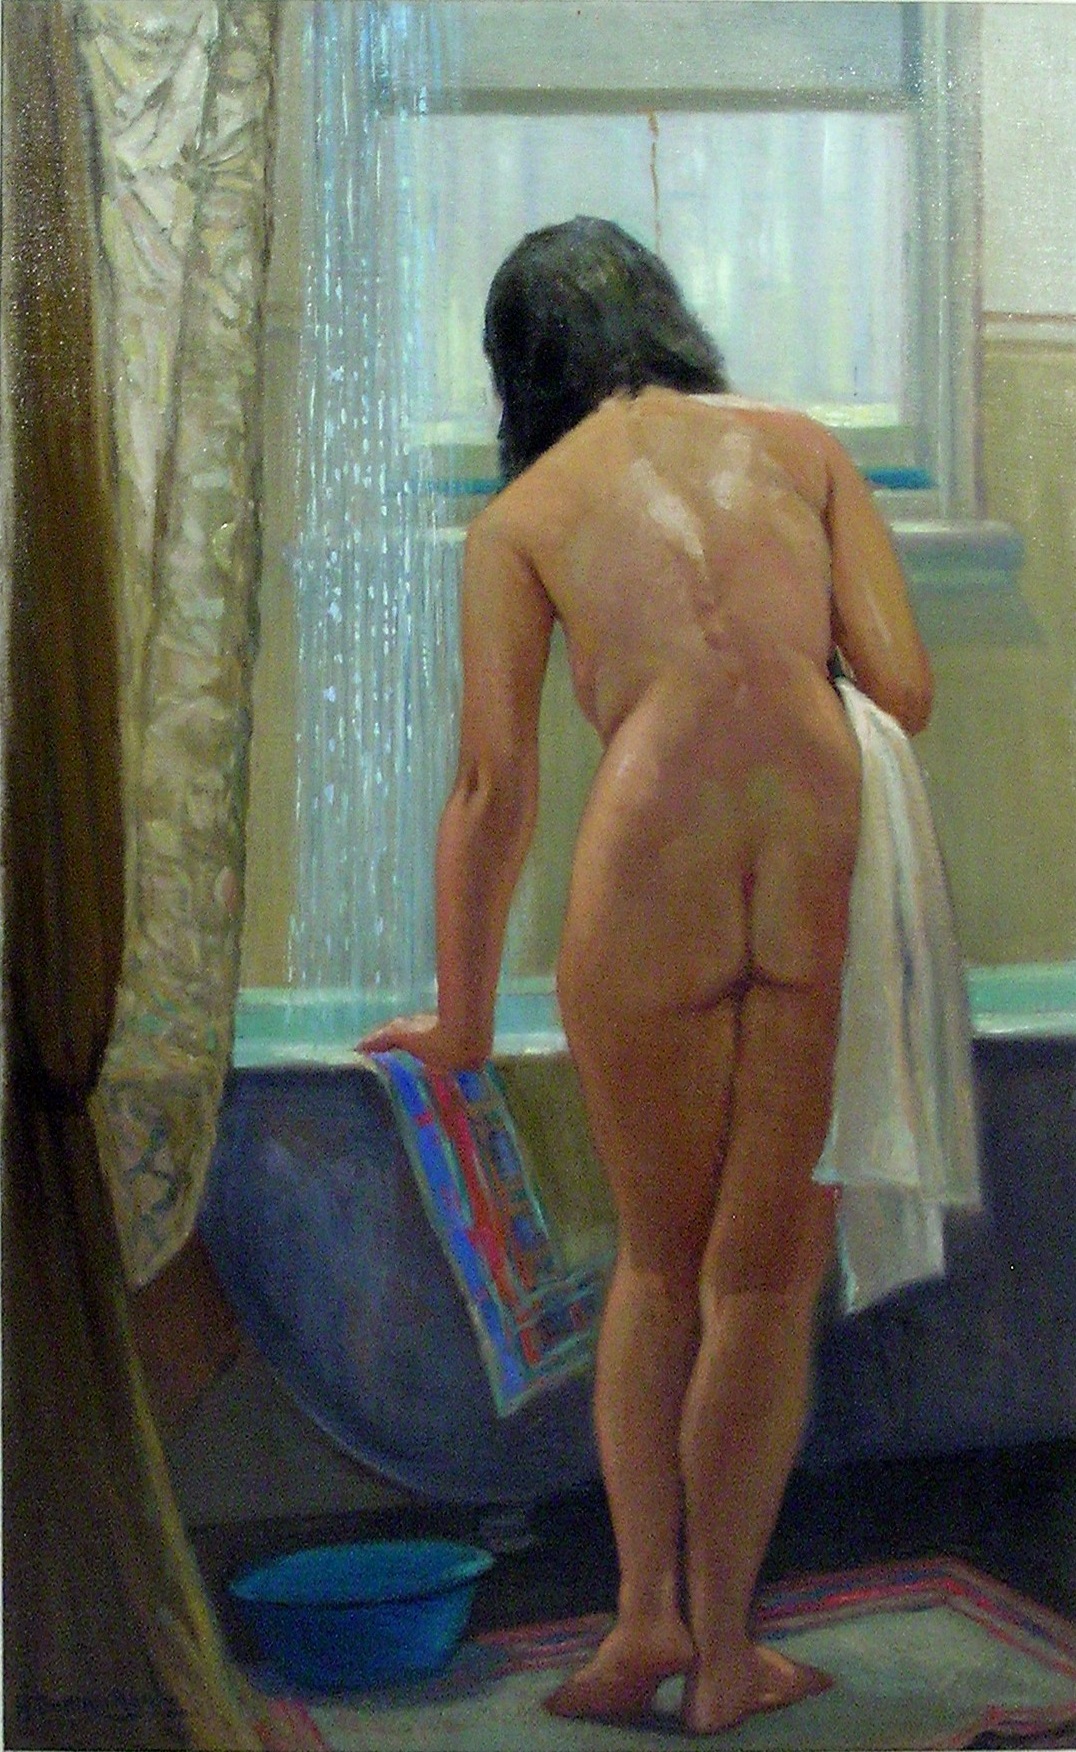 Anthony_Dattilo-Rubbo_In_the_Bathroom_91_x_61cm_Gift_of_the_artist_1940.jpg